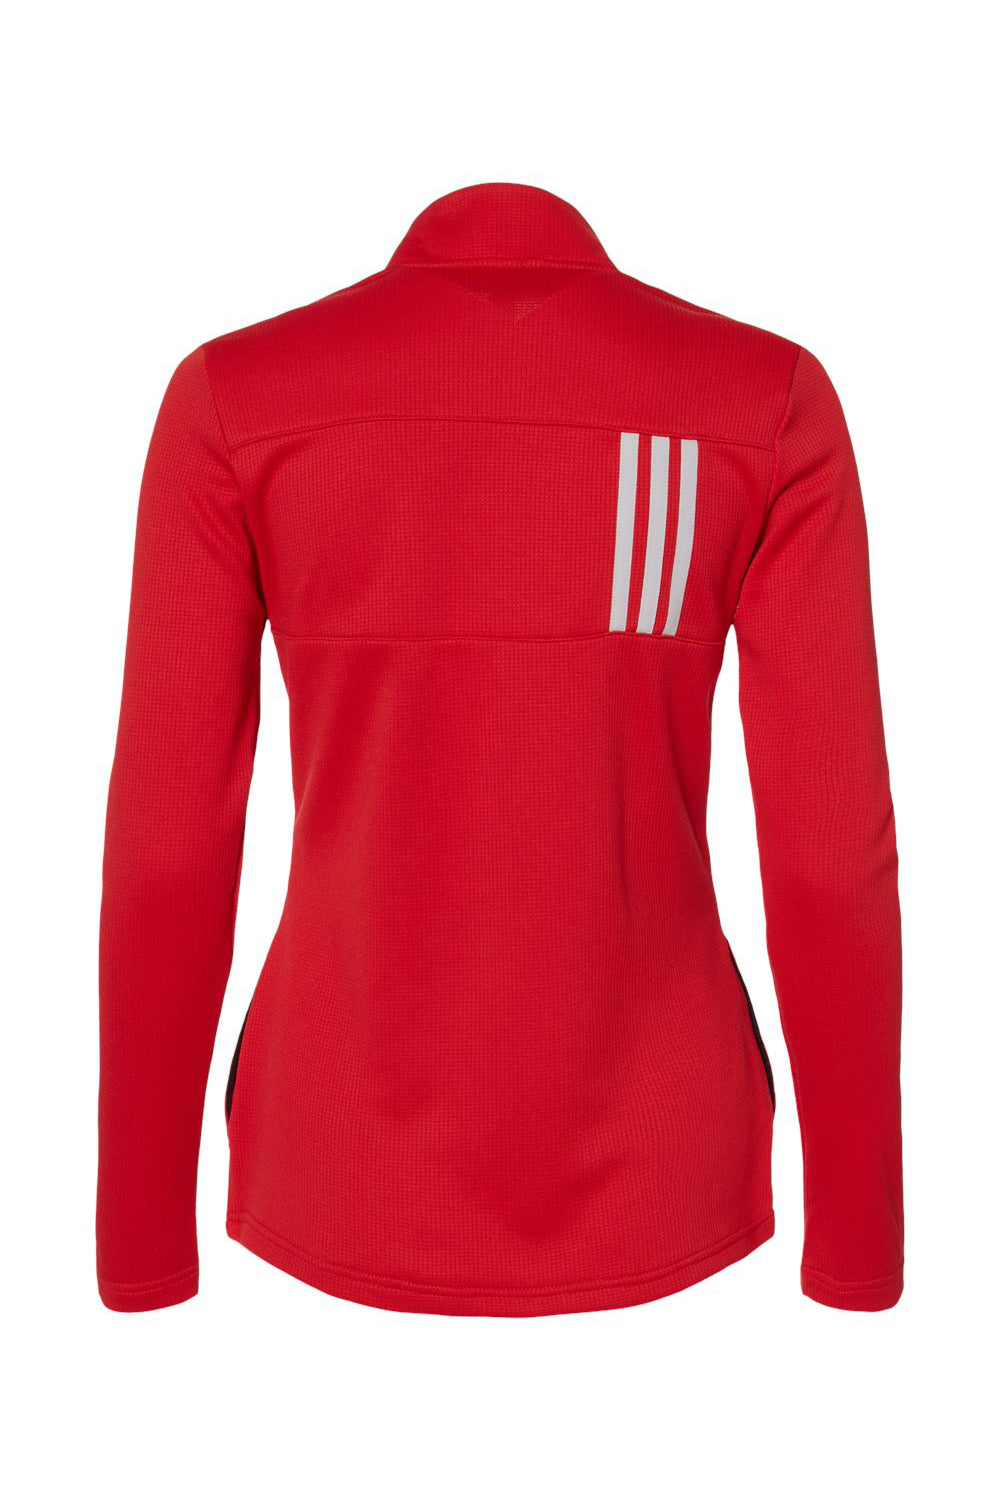 Adidas A483 Womens 3 Stripes Double Knit Moisture Wicking 1/4 Zip Sweatshirt Team Collegiate Red/Grey Flat Back